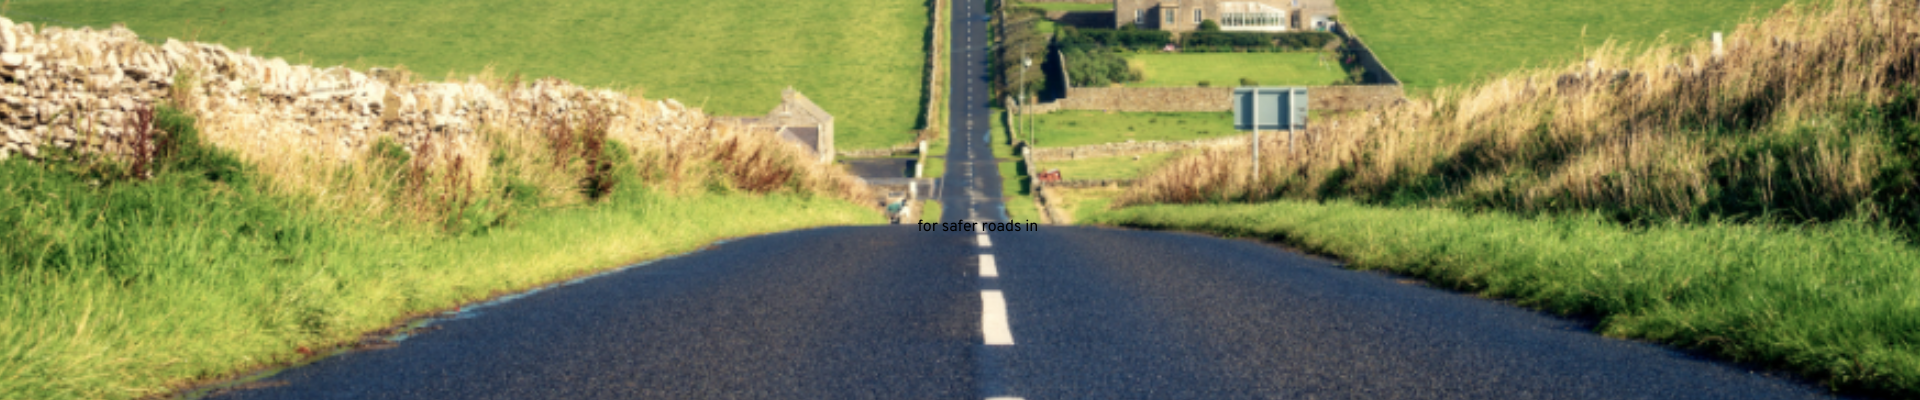 £38 million boost for safer roads across England